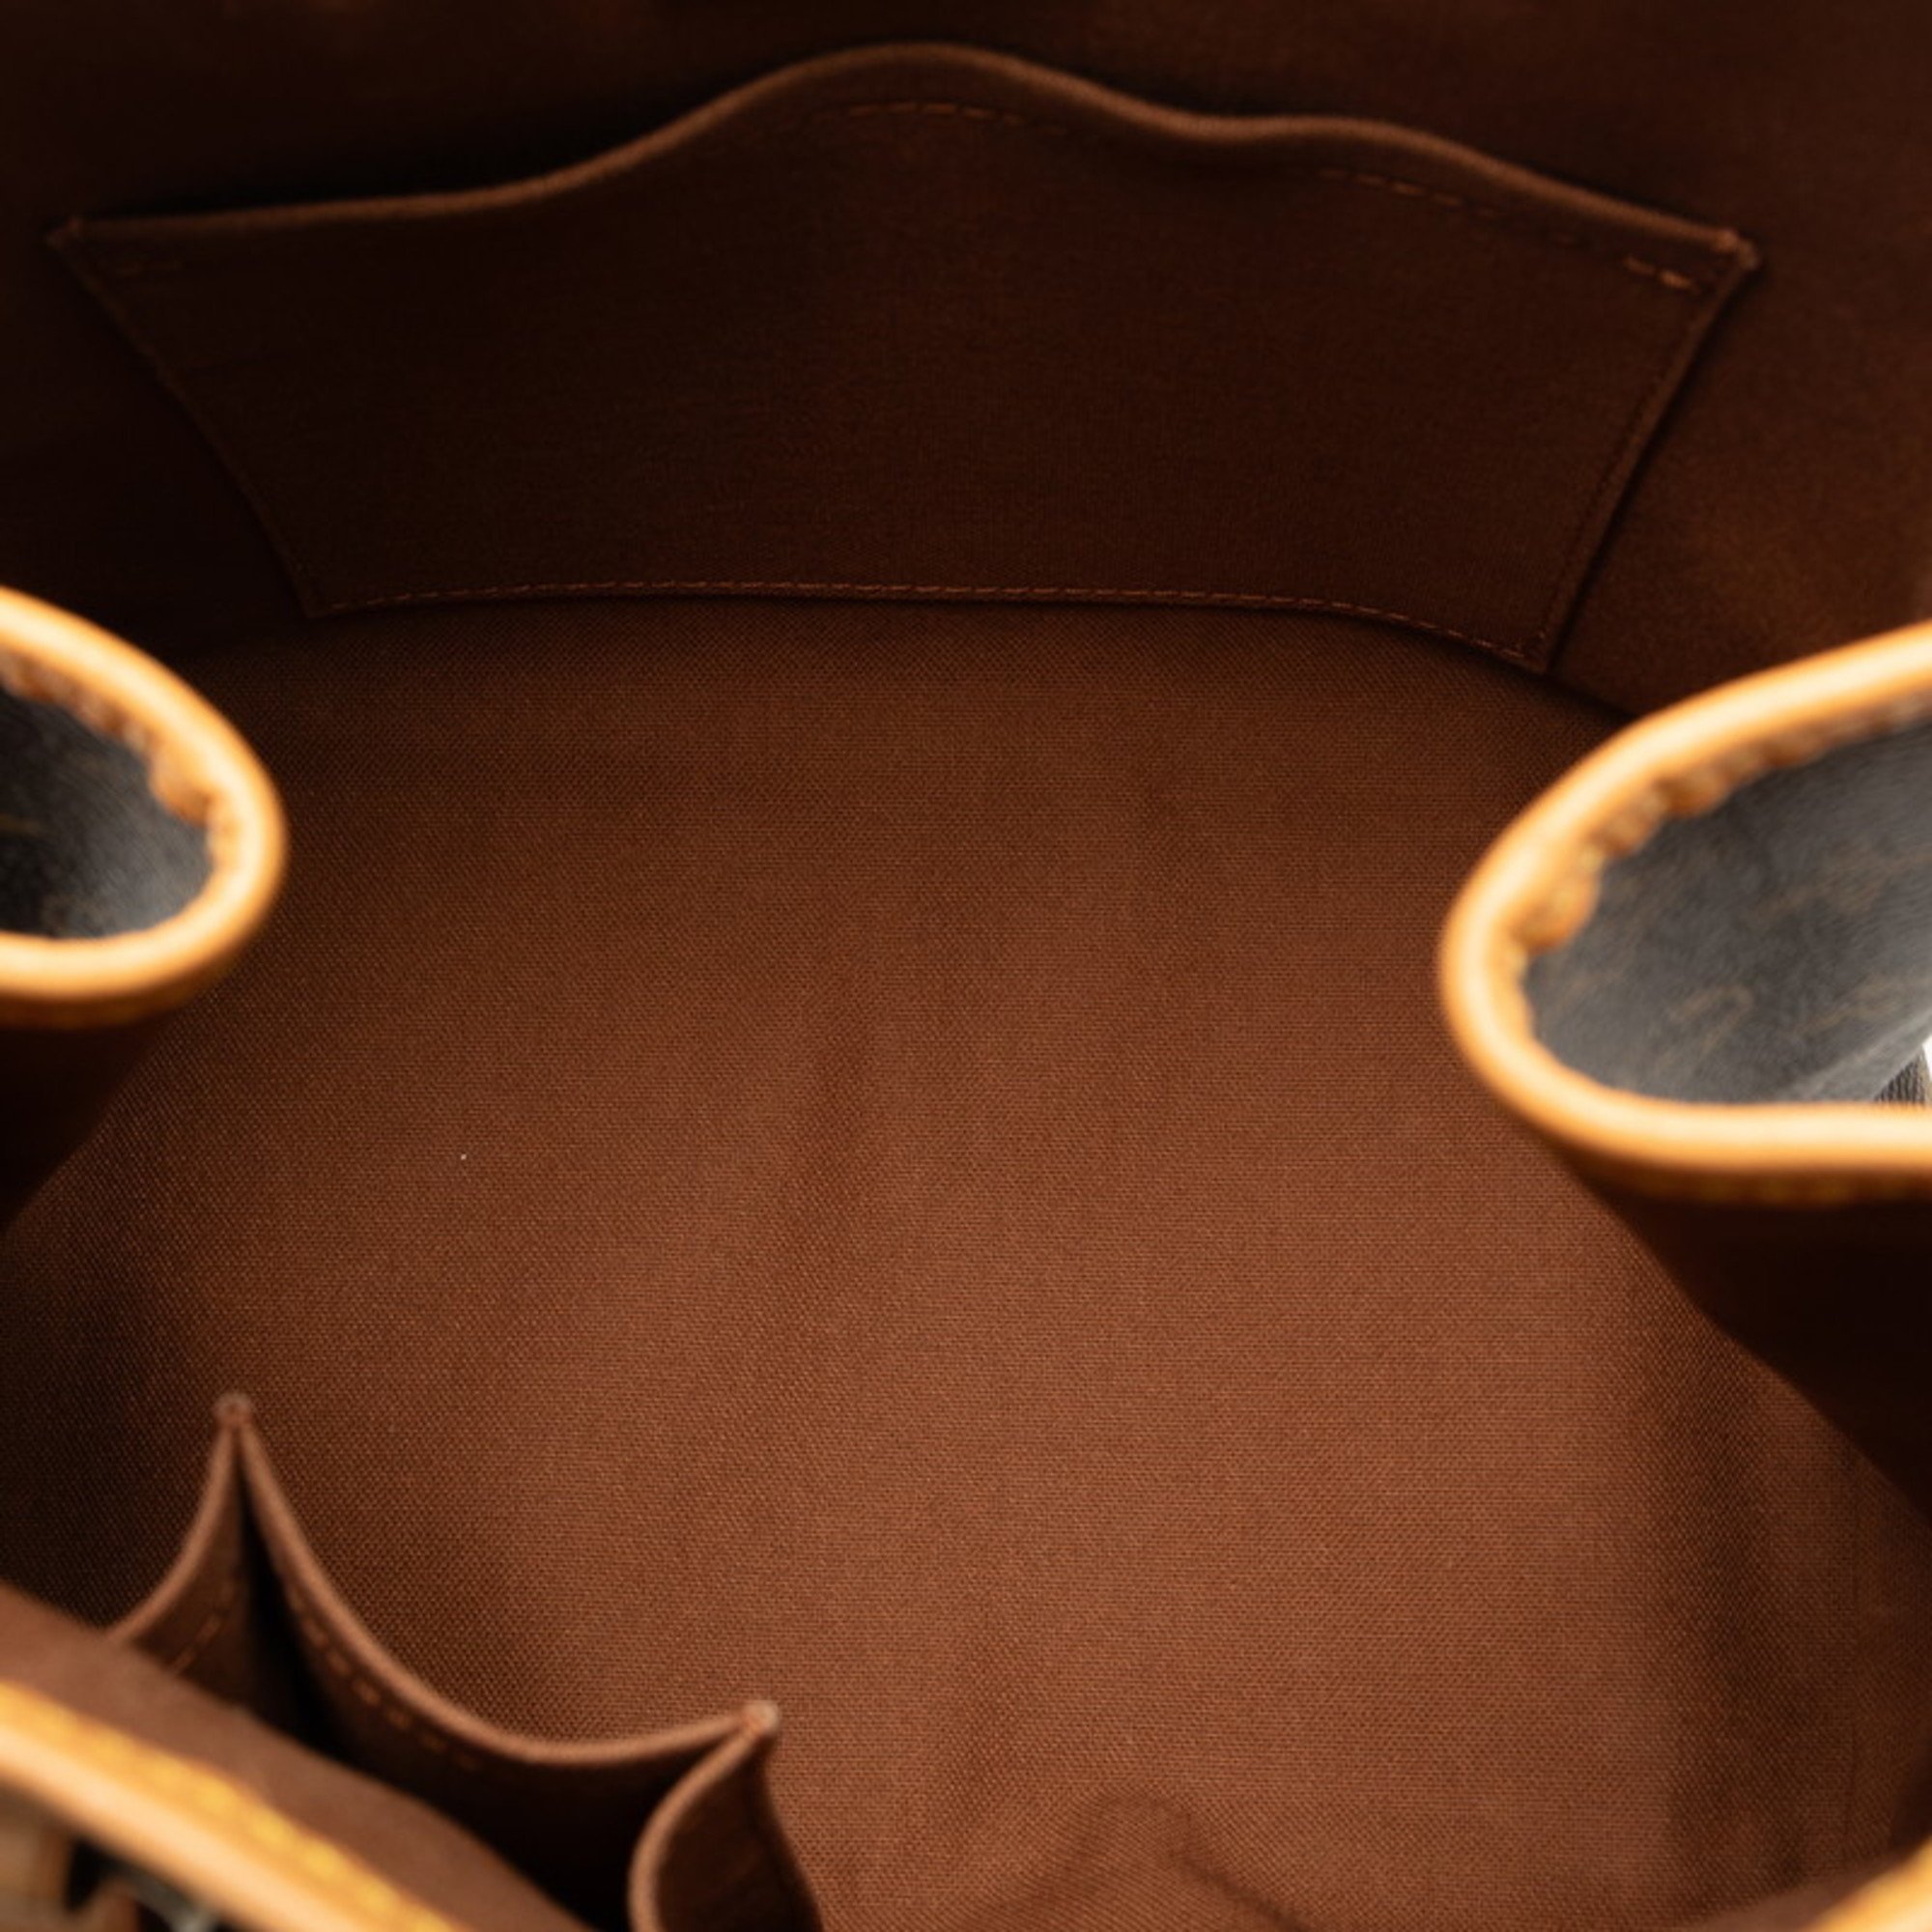 Louis Vuitton Monogram Batignolles Handbag Tote Bag M51156 Brown PVC Leather Women's LOUIS VUITTON